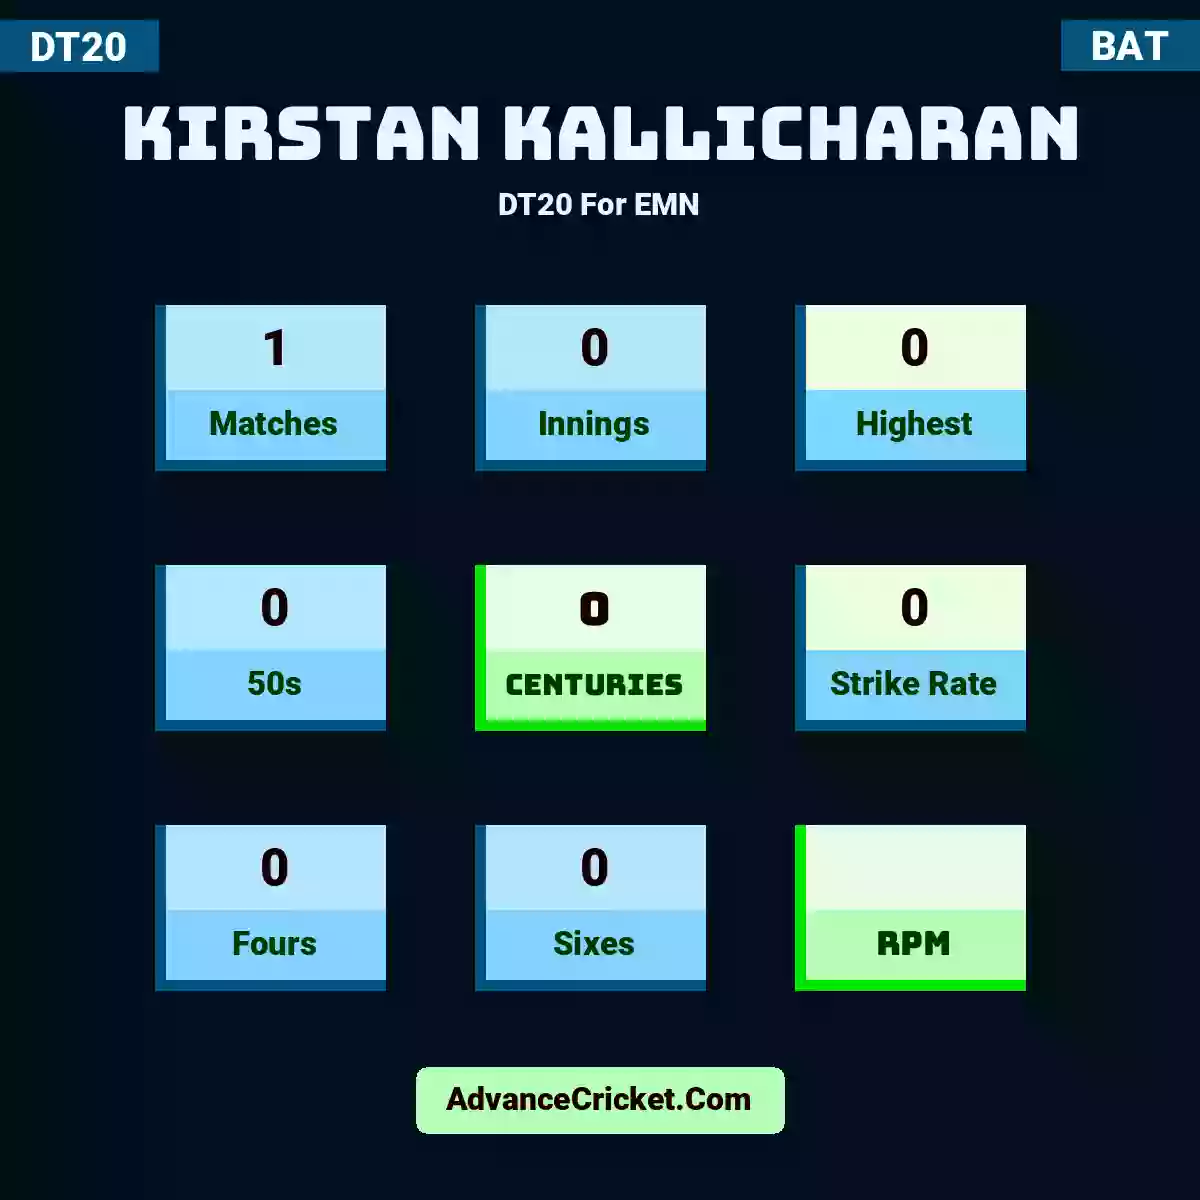 Kirstan Kallicharan DT20  For EMN, Kirstan Kallicharan played 1 matches, scored 0 runs as highest, 0 half-centuries, and 0 centuries, with a strike rate of 0. K.Kallicharan hit 0 fours and 0 sixes.